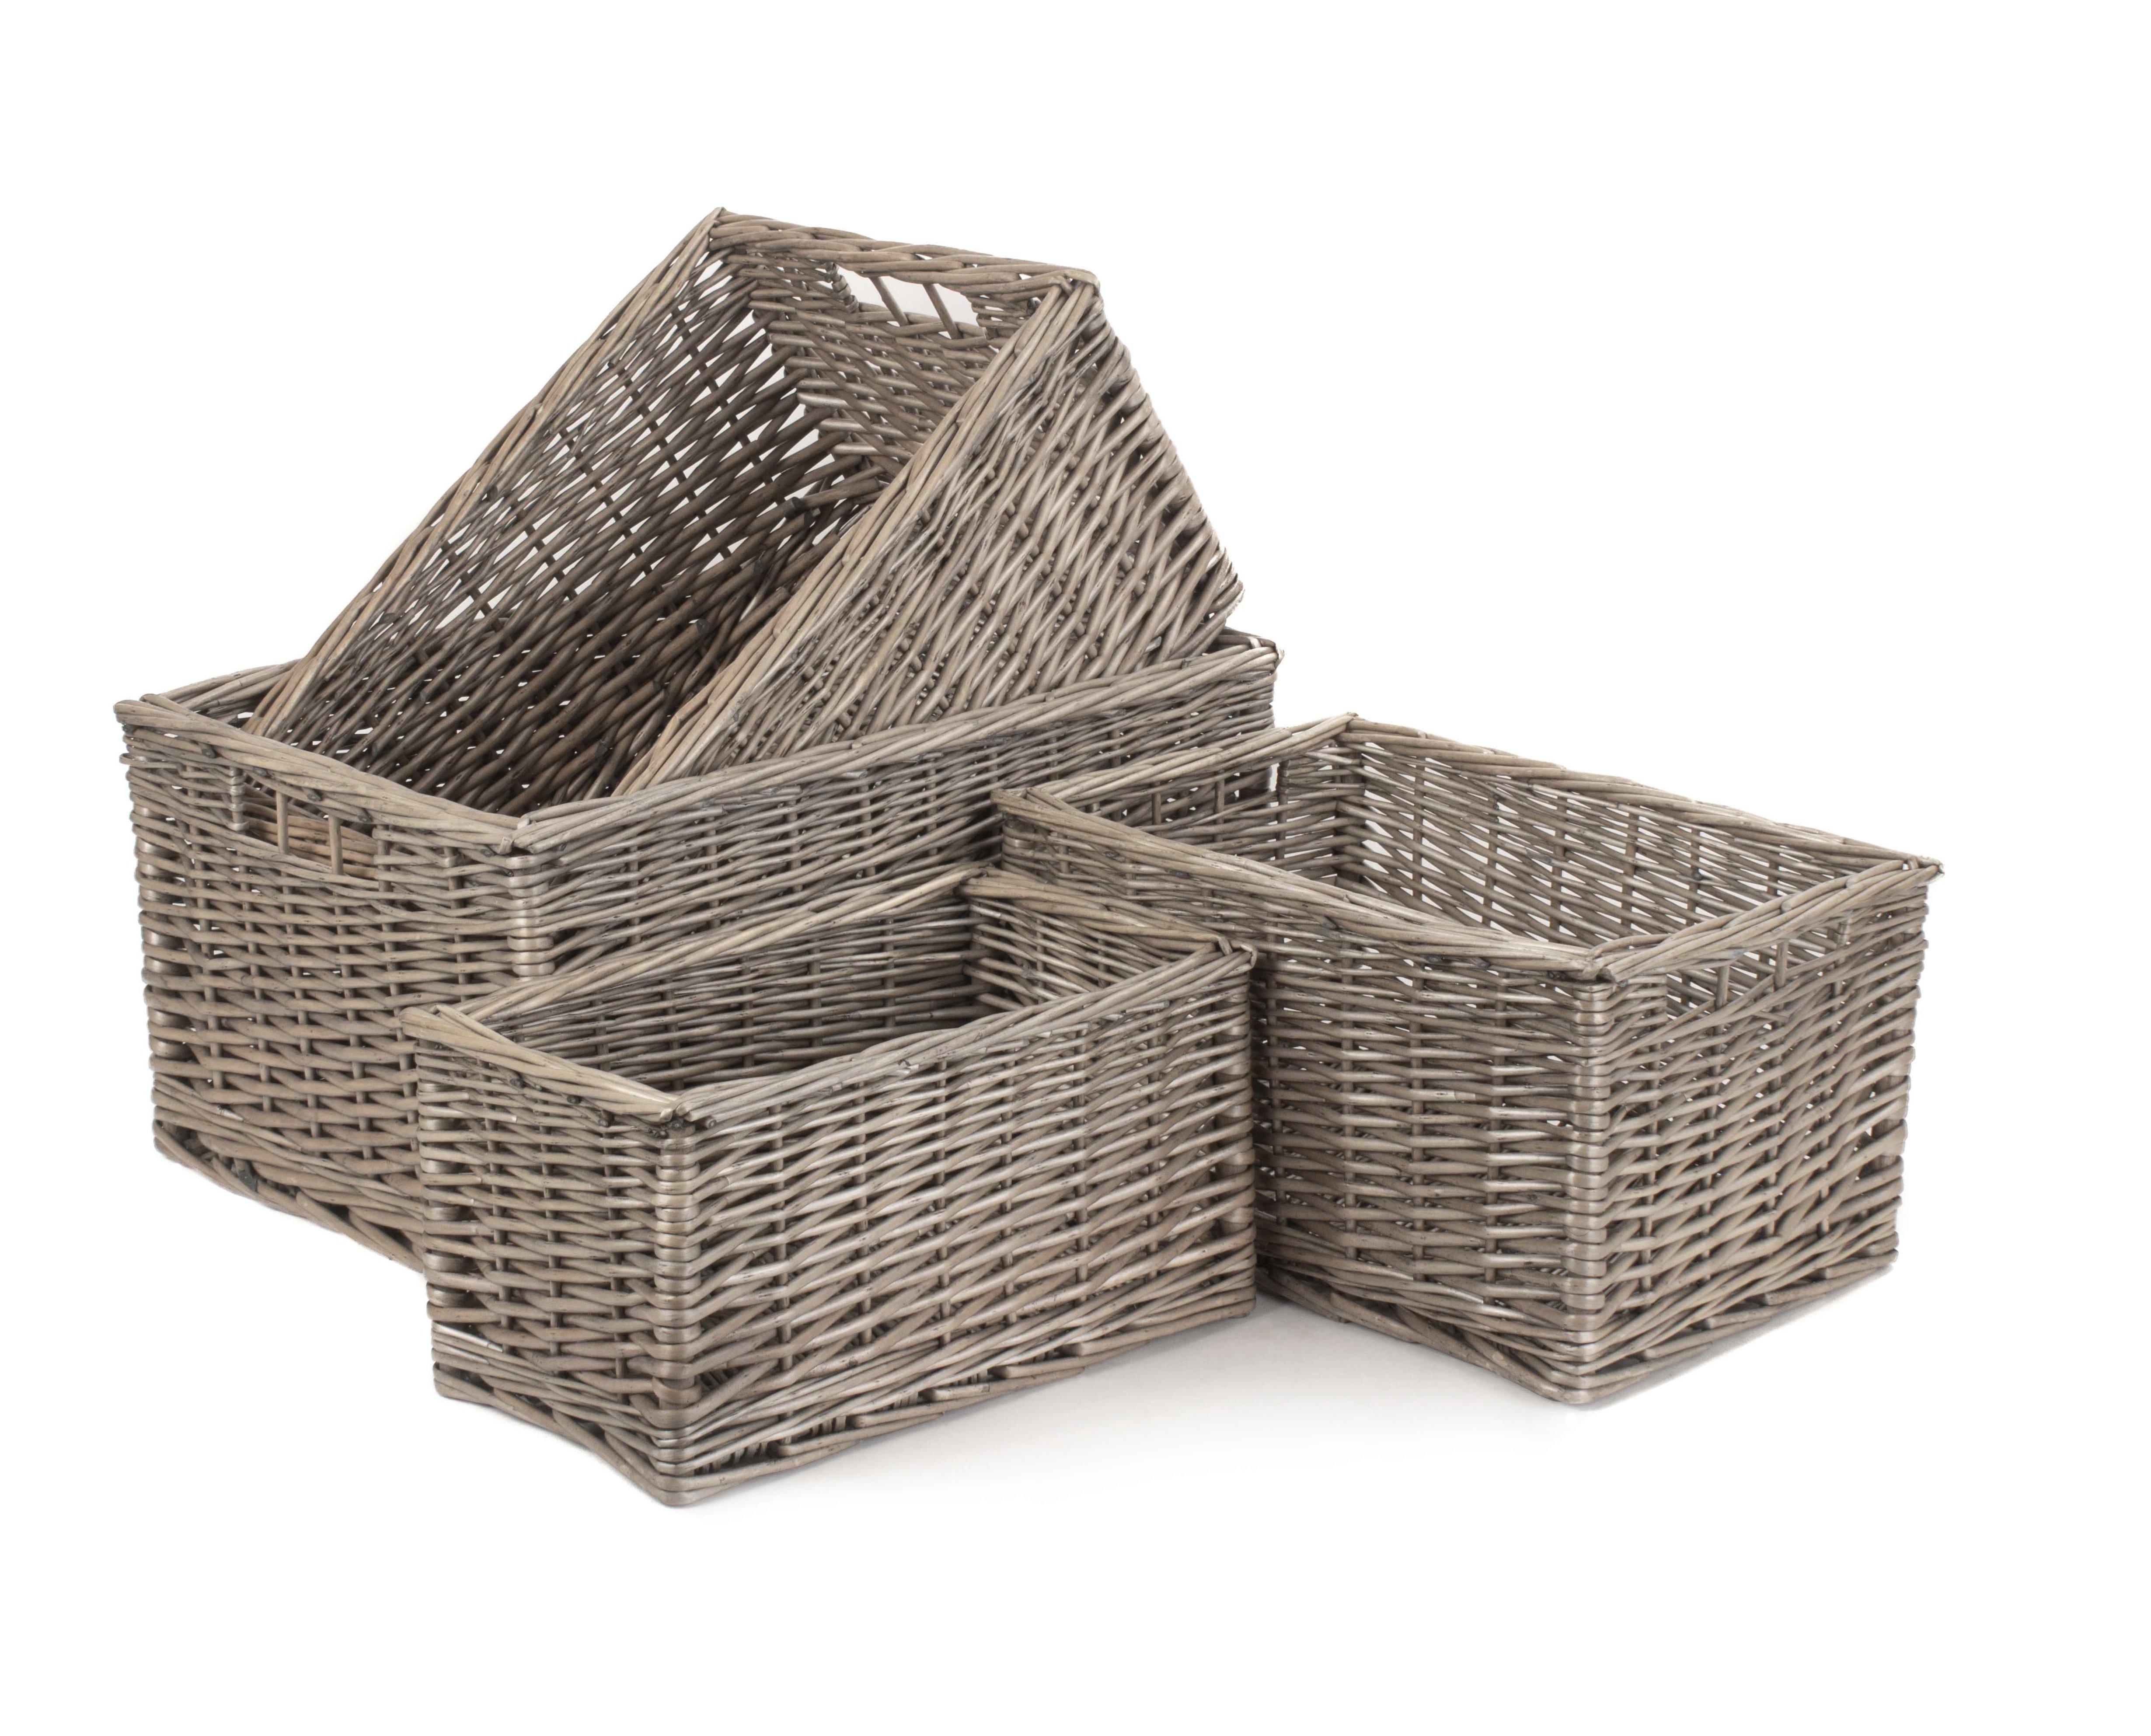 Wicker Antique Wash Lined Open Storage Baskets Set of 4